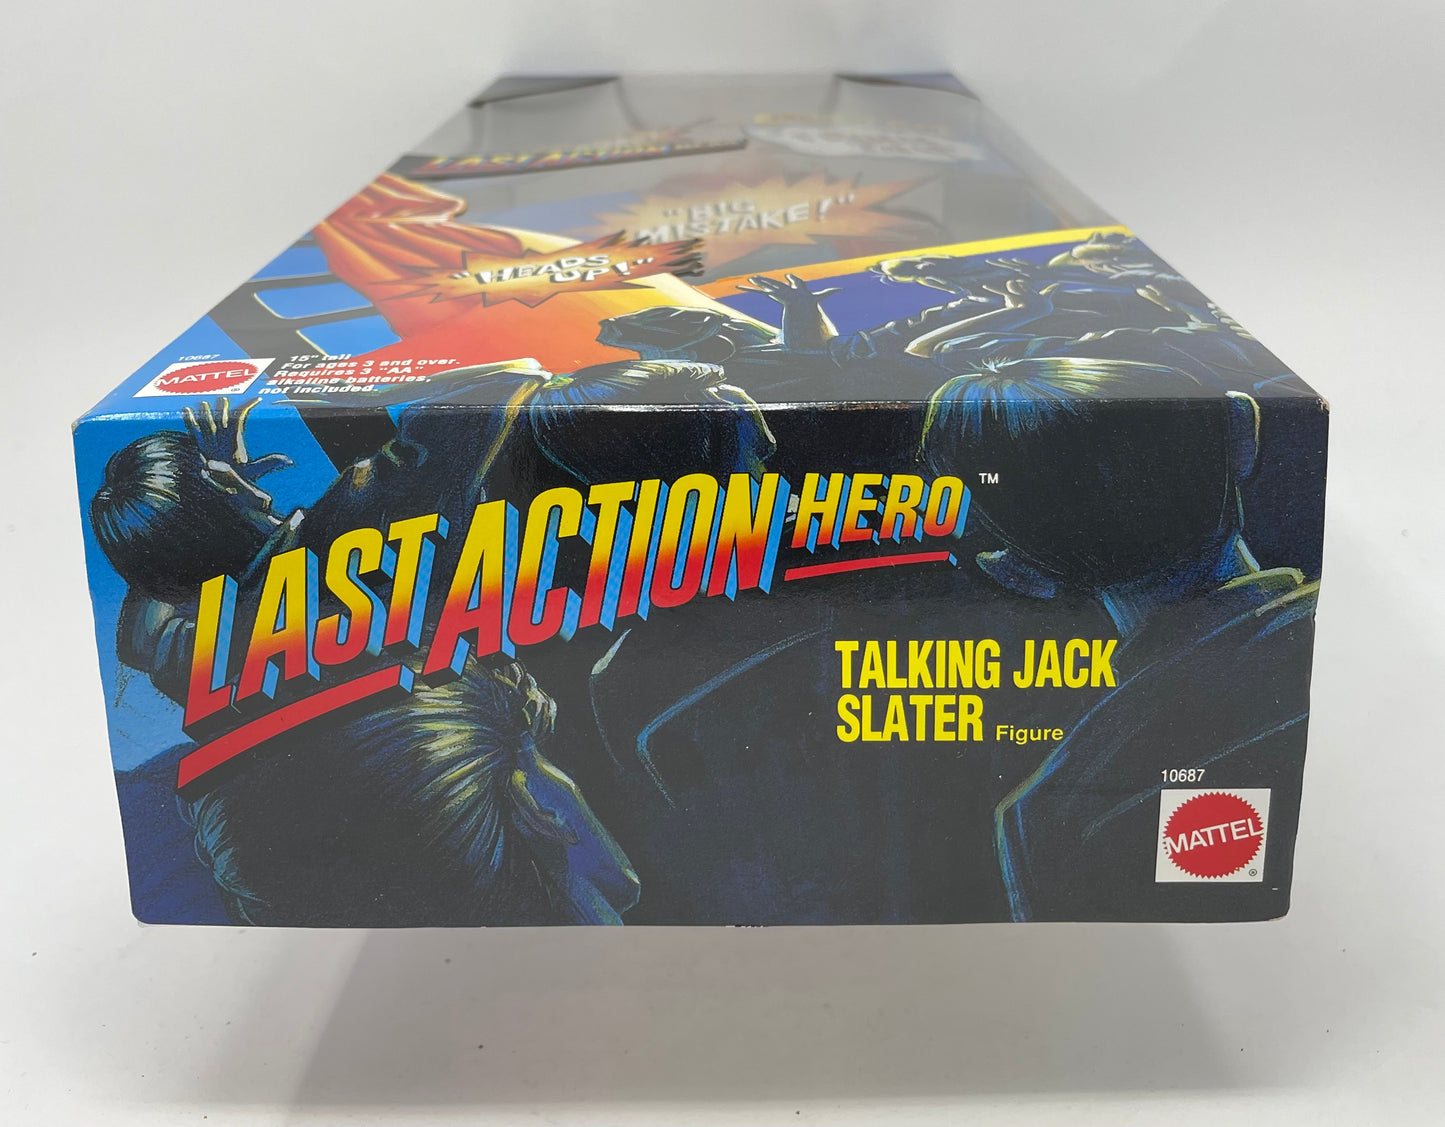 TALKING JACK SLATER - LAST ACTION HERO #10687 - MATTEL 1993